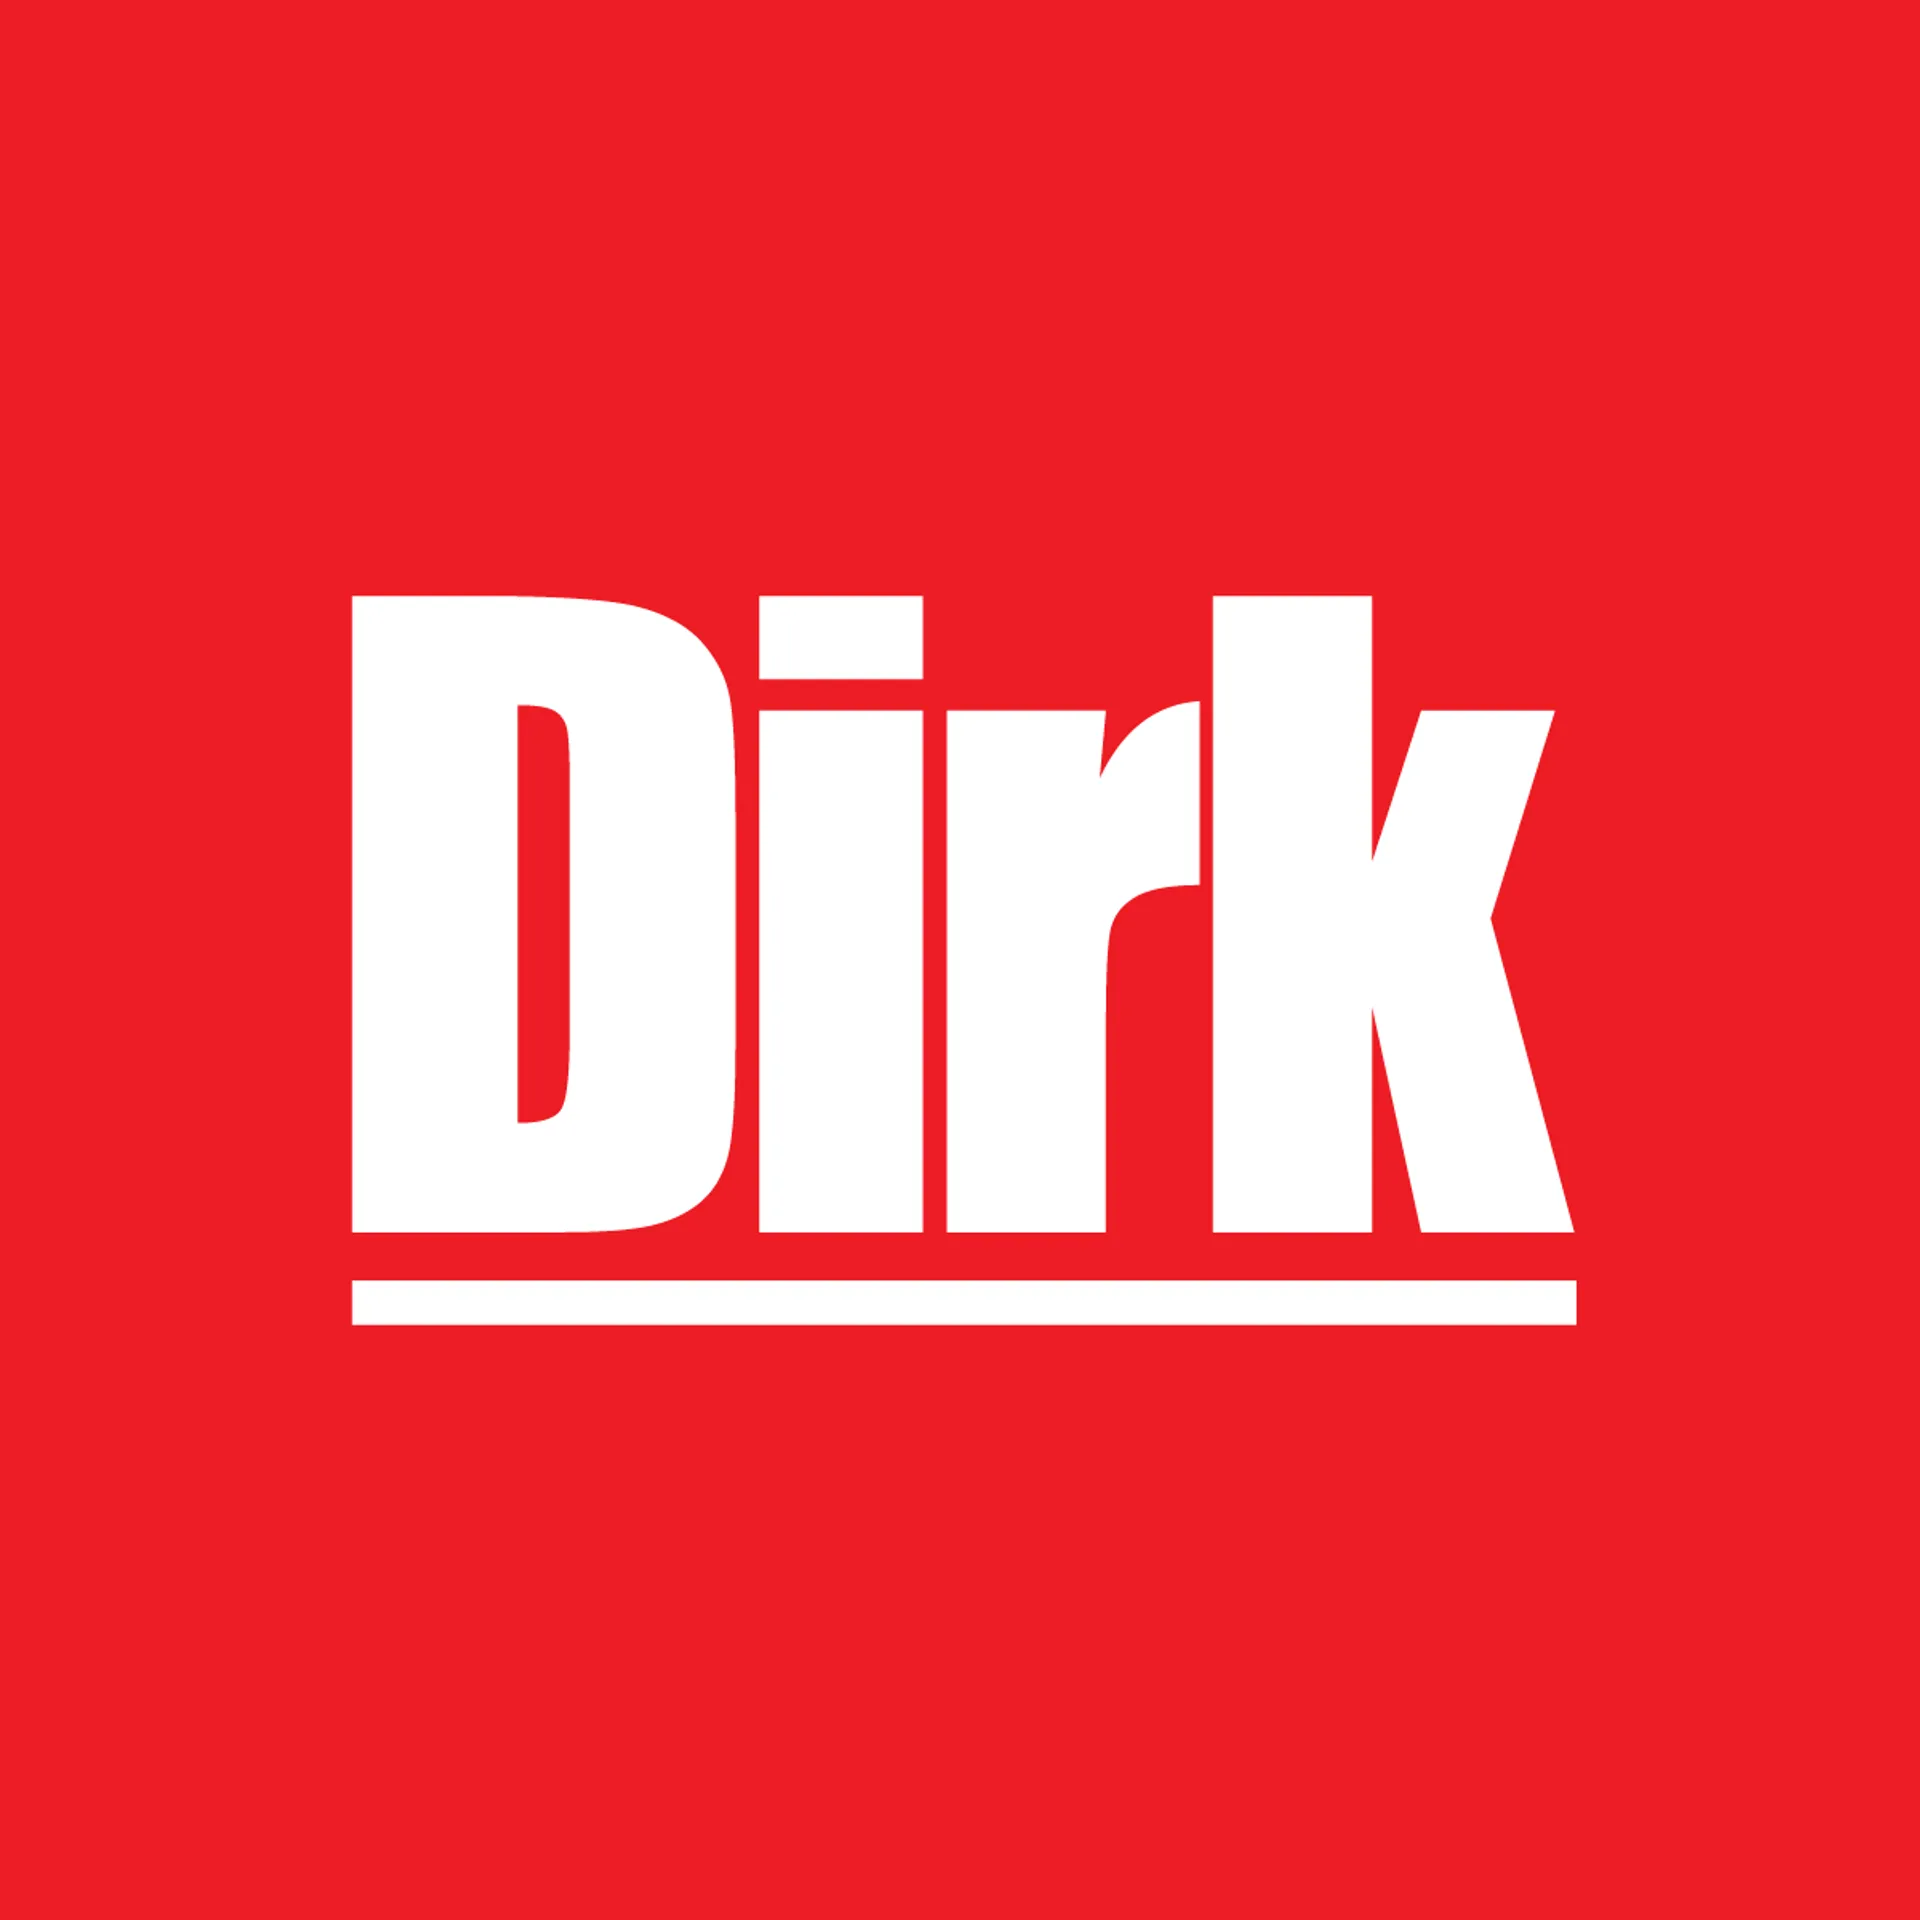 DIRK logo